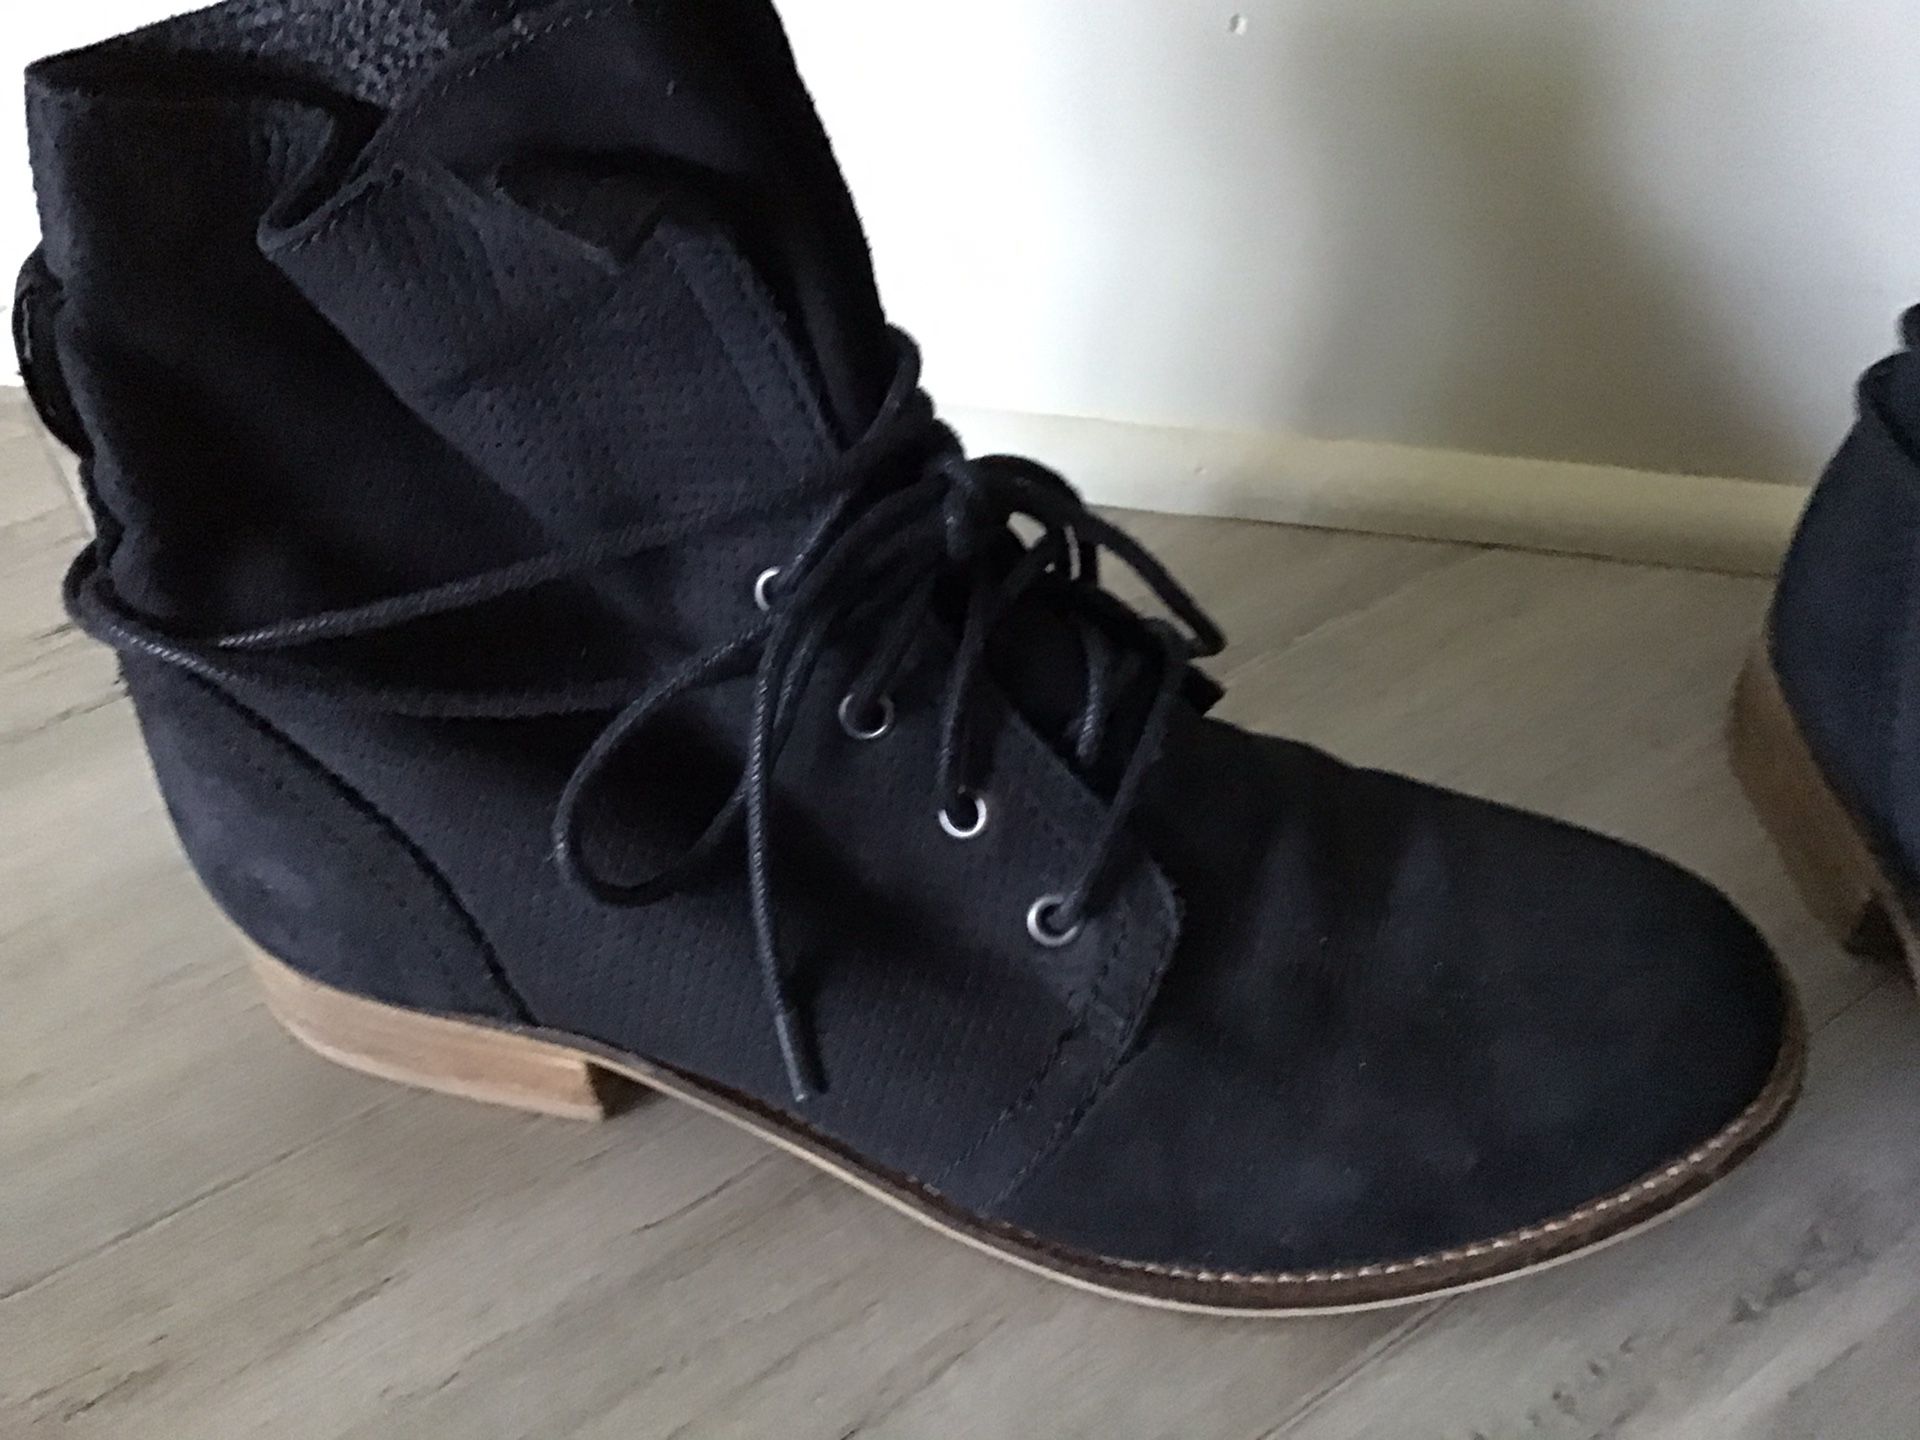 Aldo Black Leather Lace up Boots Size 9